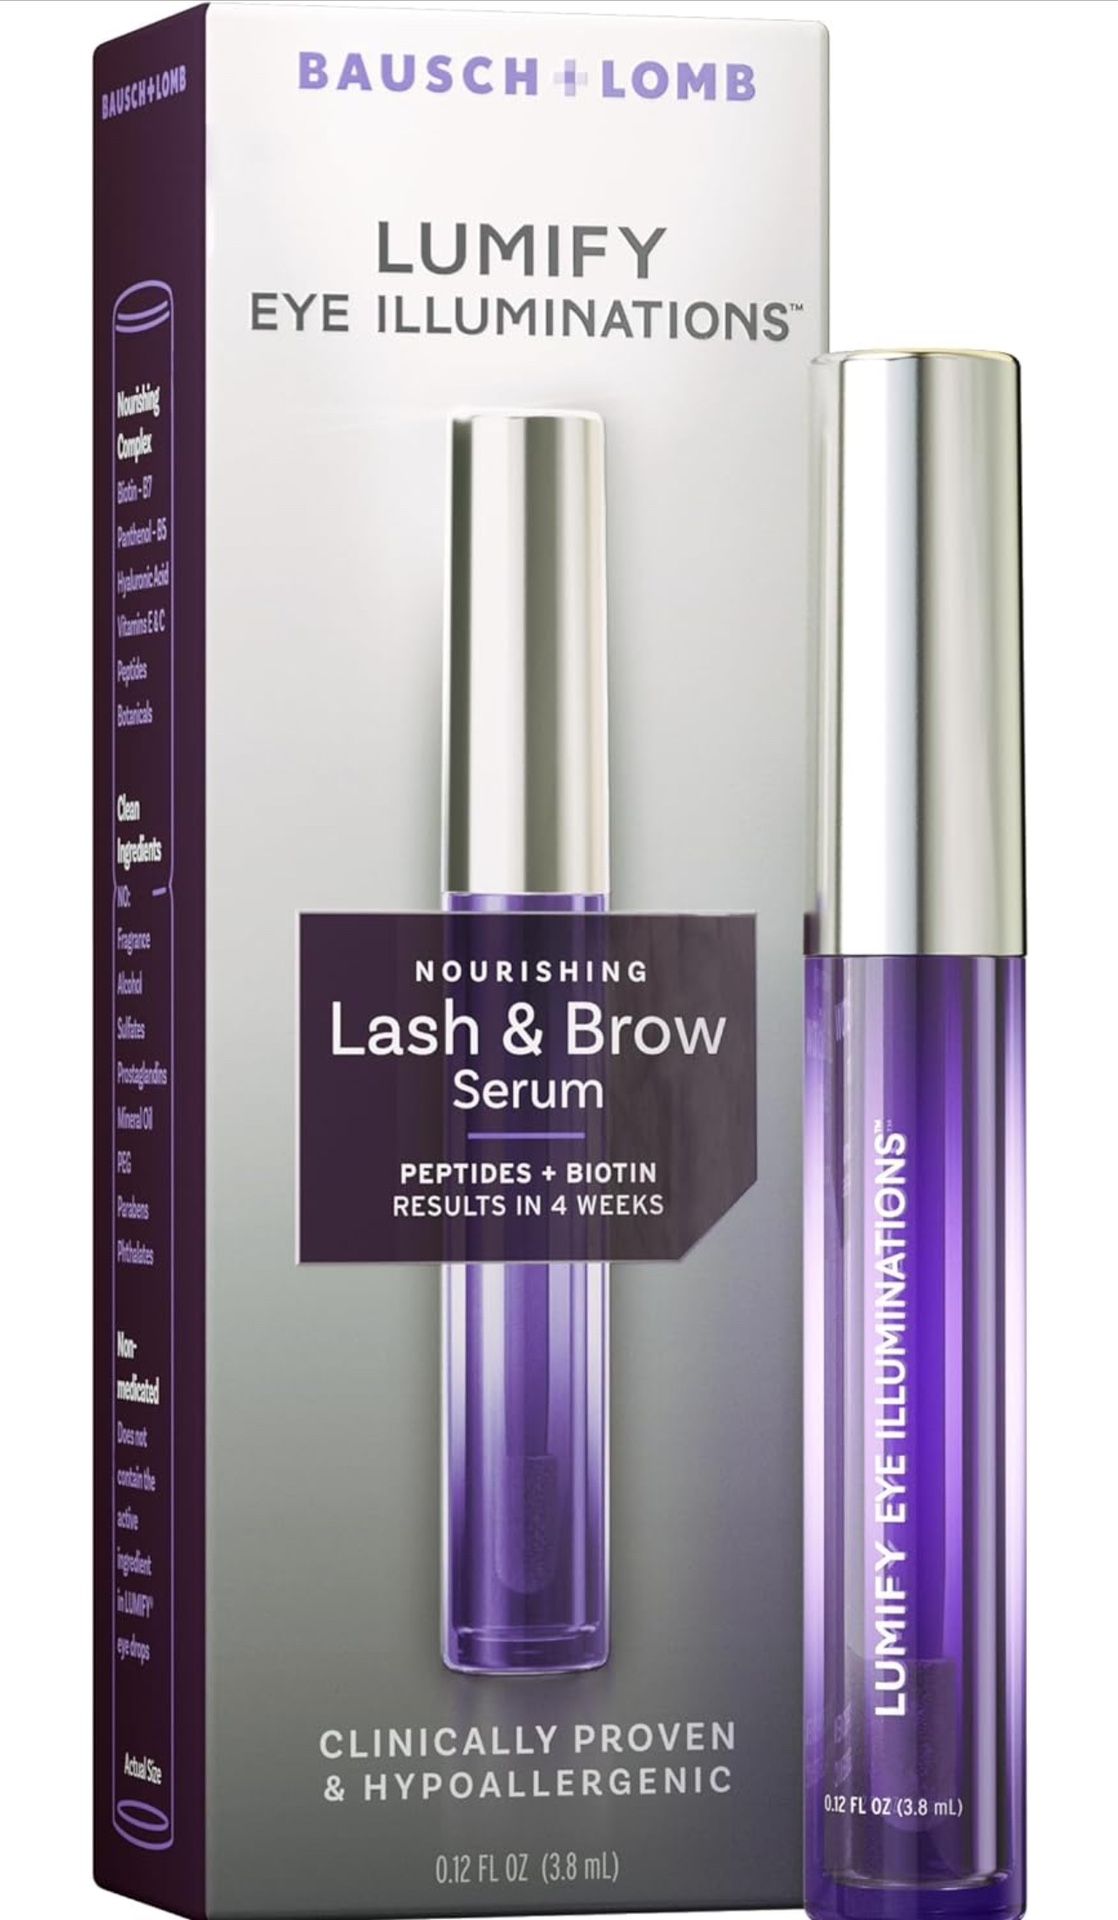 LUMIFY Eye Illuminations™ Nourishing Lash & Brow Serum 0.12